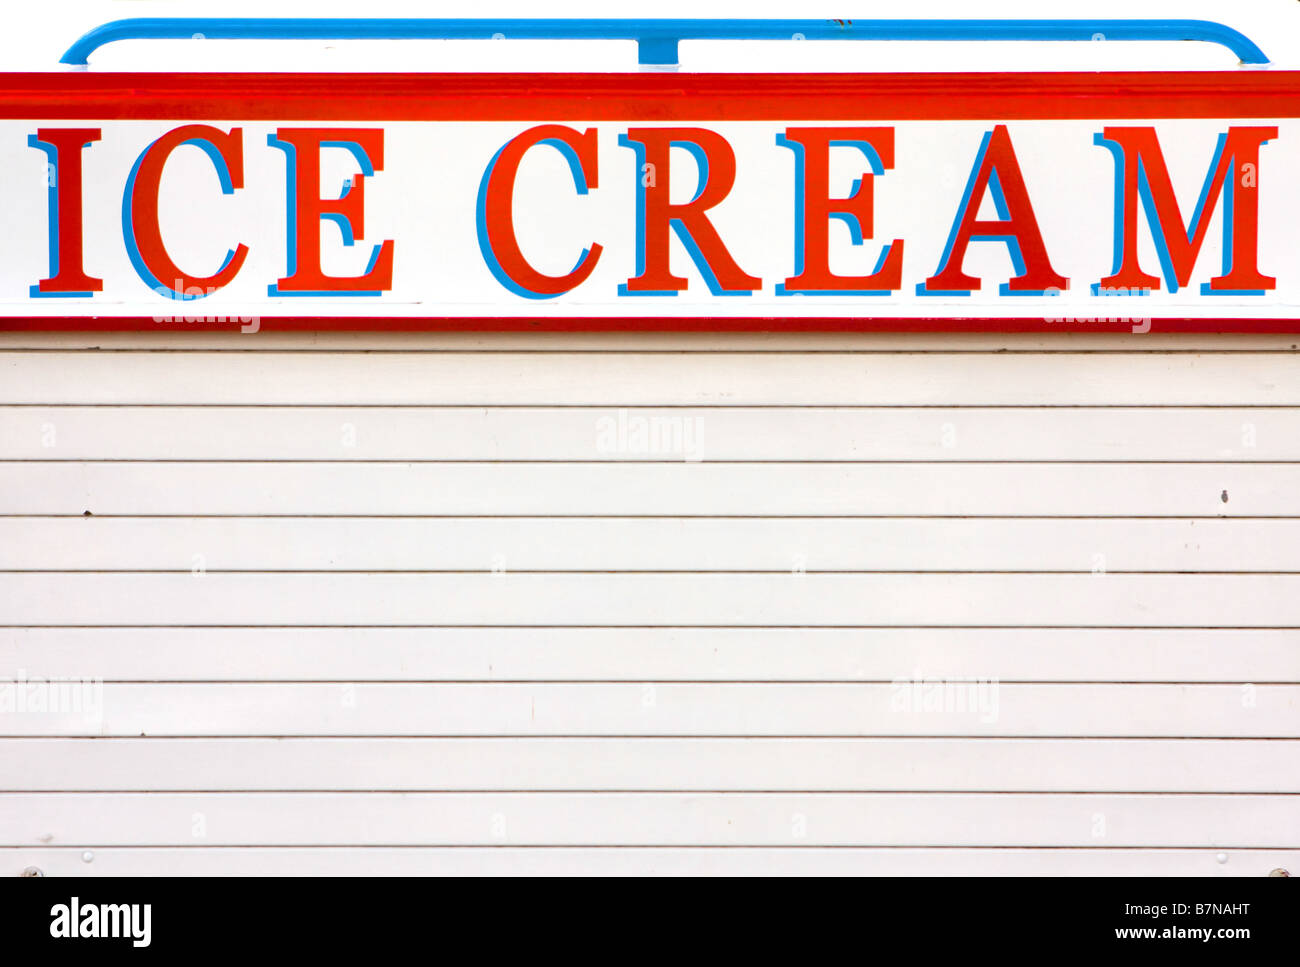 Ice Cream segno van chiatta barca Stratford upon Avon estate rinfrescante Foto Stock